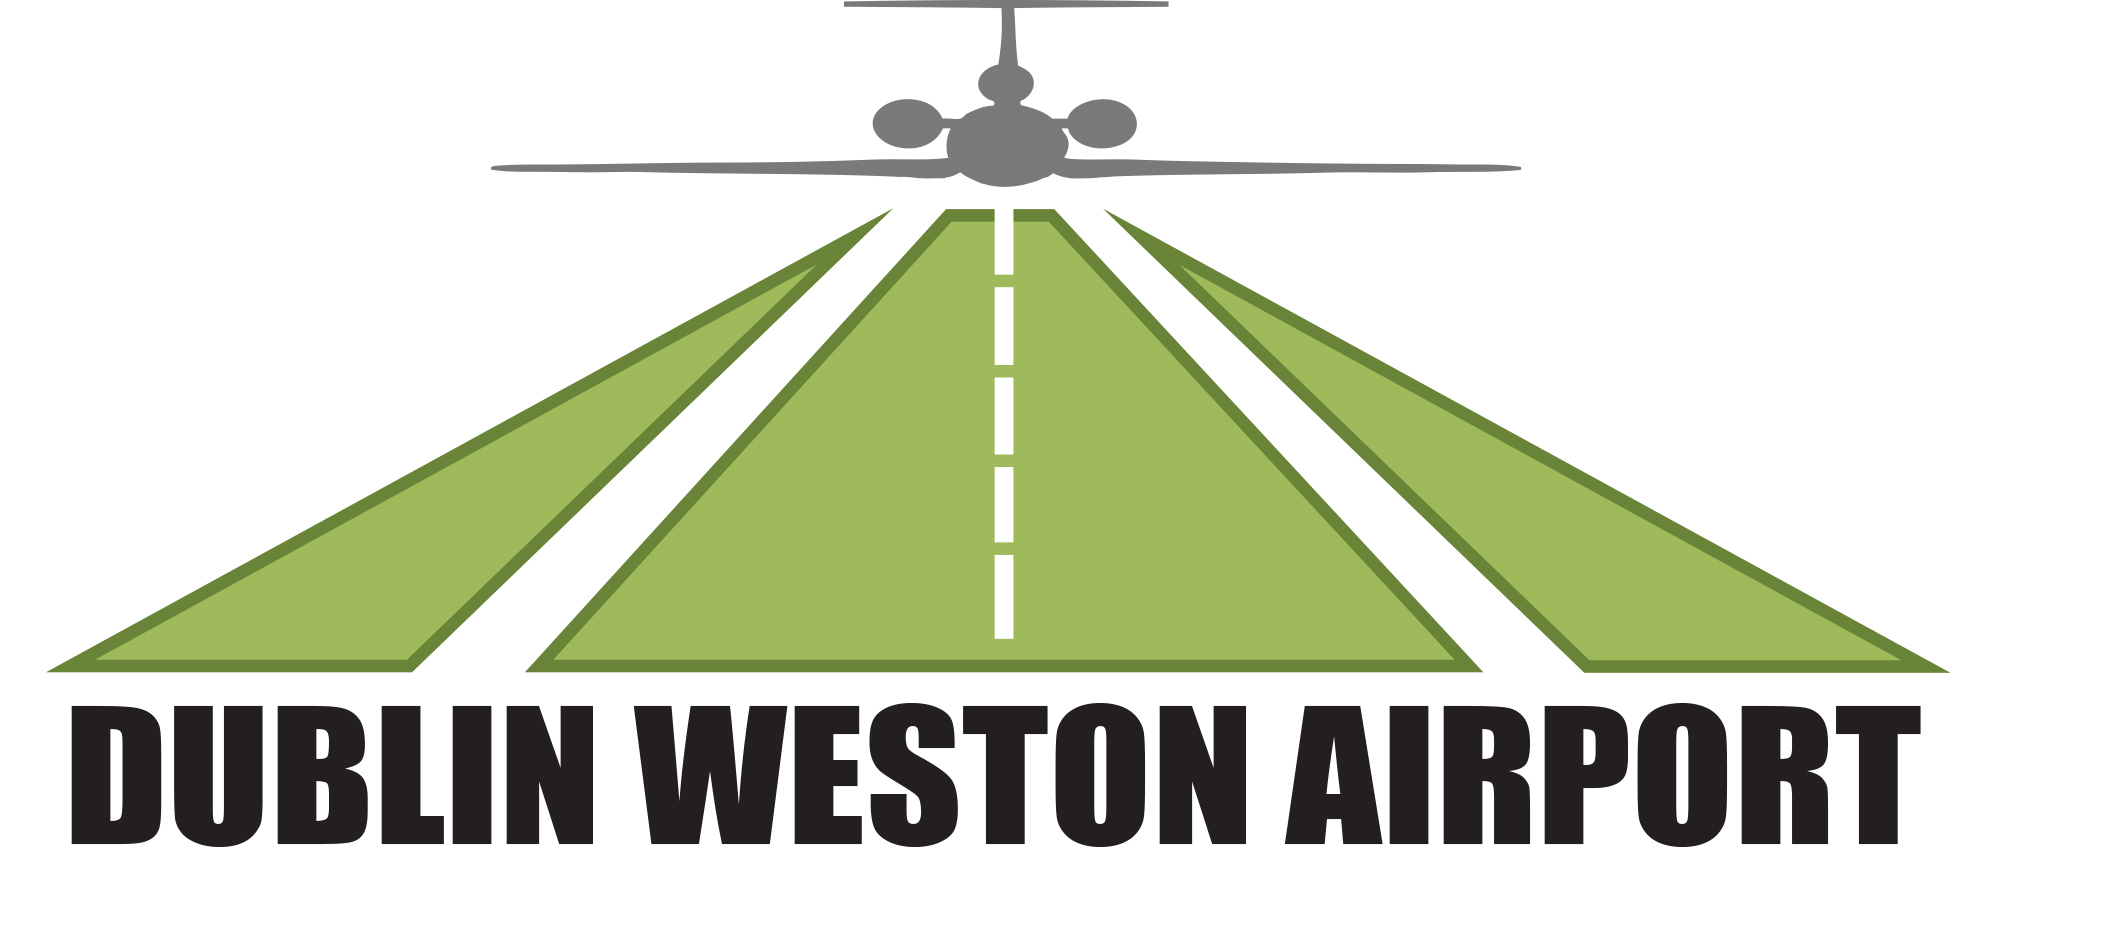 weston airport logojpg